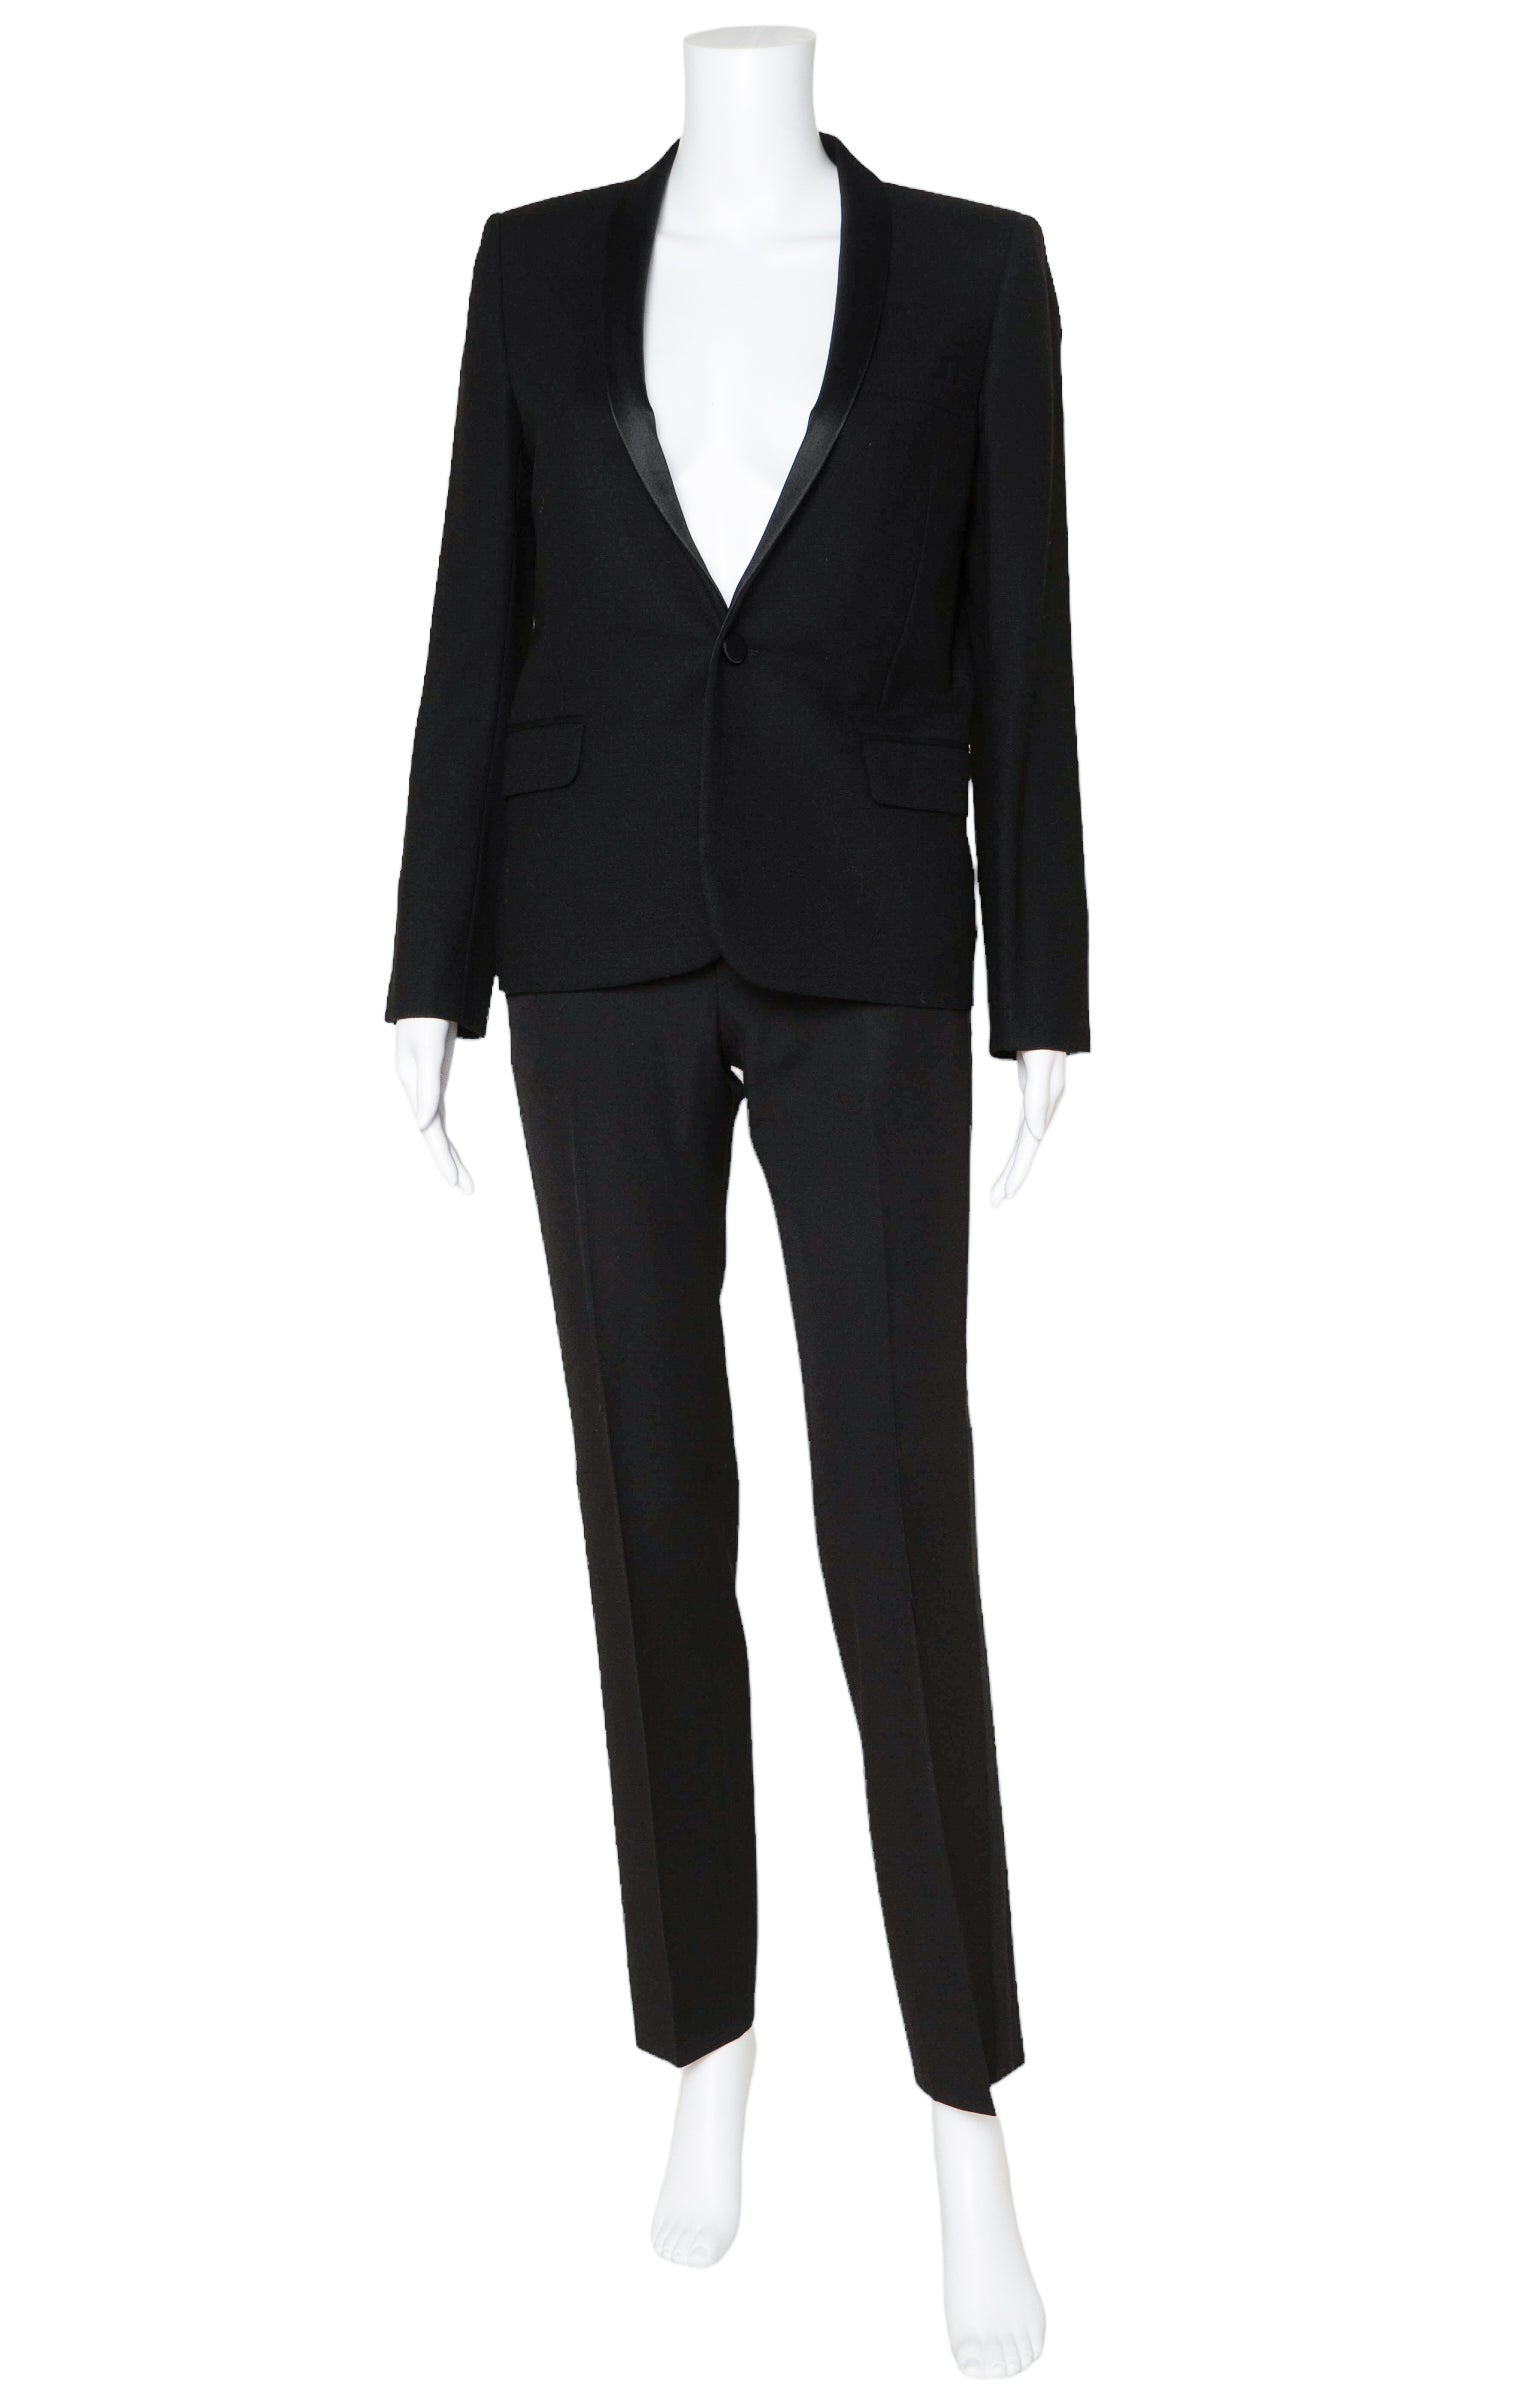 SAINT LAURENT (RARE) Suit Size: Jacket - FR 36 / Comparable to US 2-4 Pants - FR 34 / Comparable to US 0-2